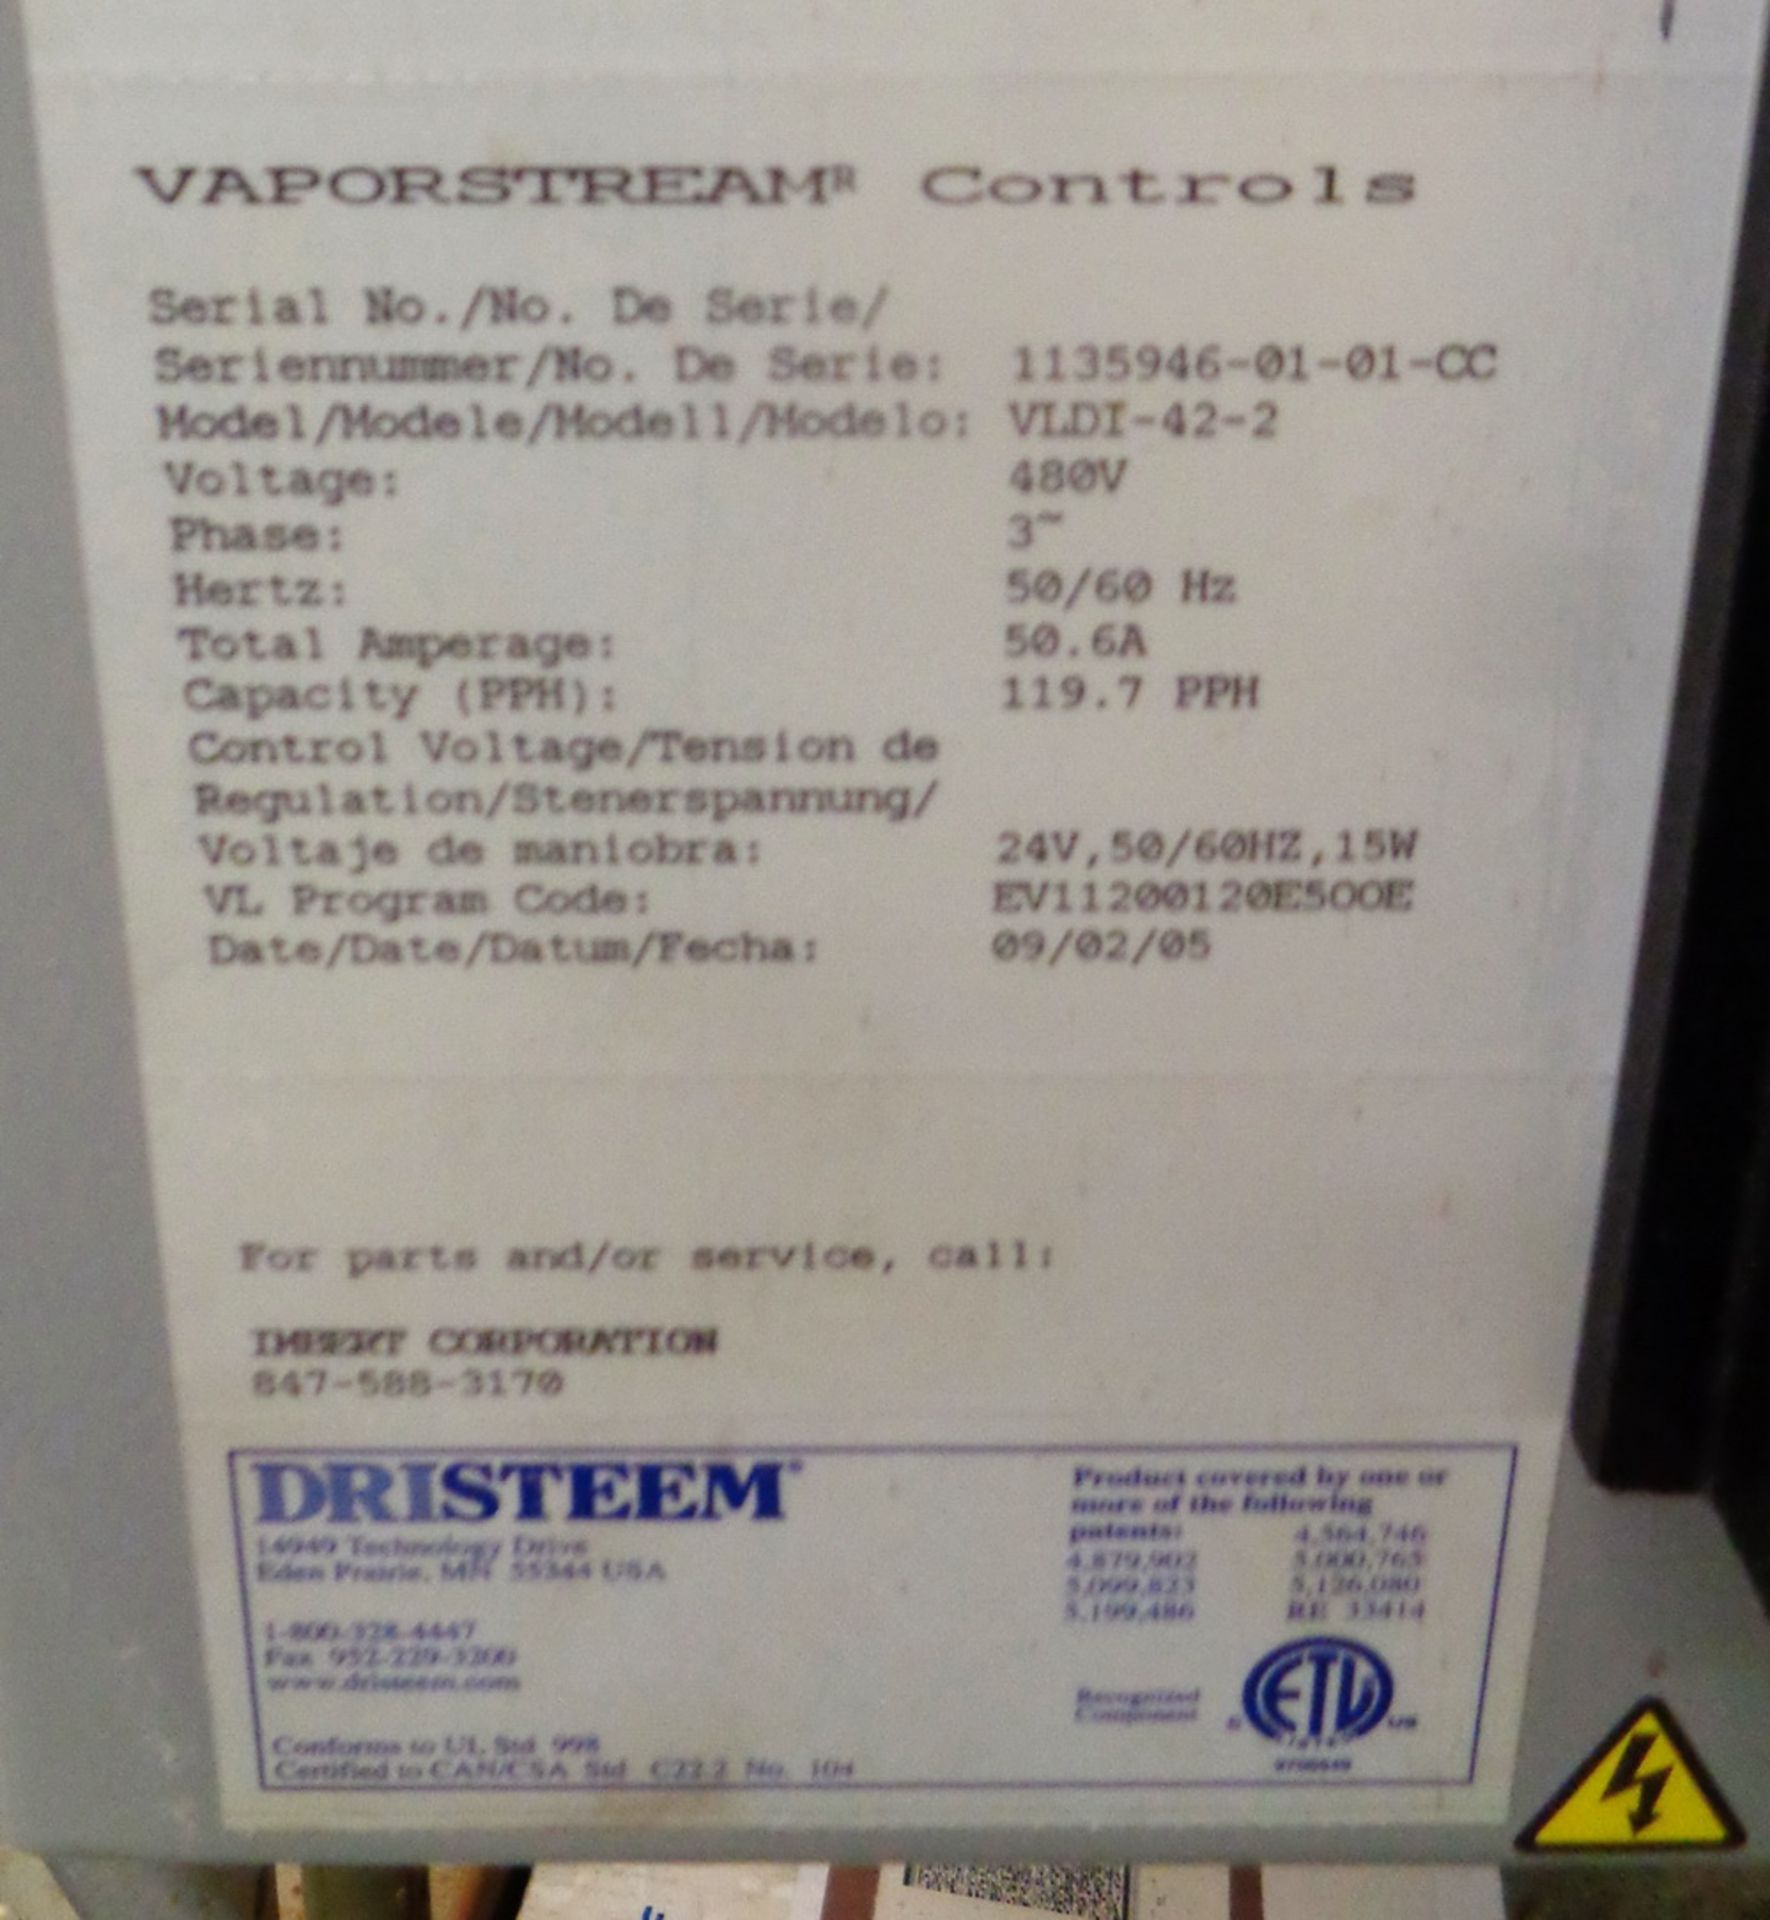 DriSteem Vaporstream Humidifier, Model VLDI-42-2, S/N 1135946-01-01-CC - Image 3 of 4